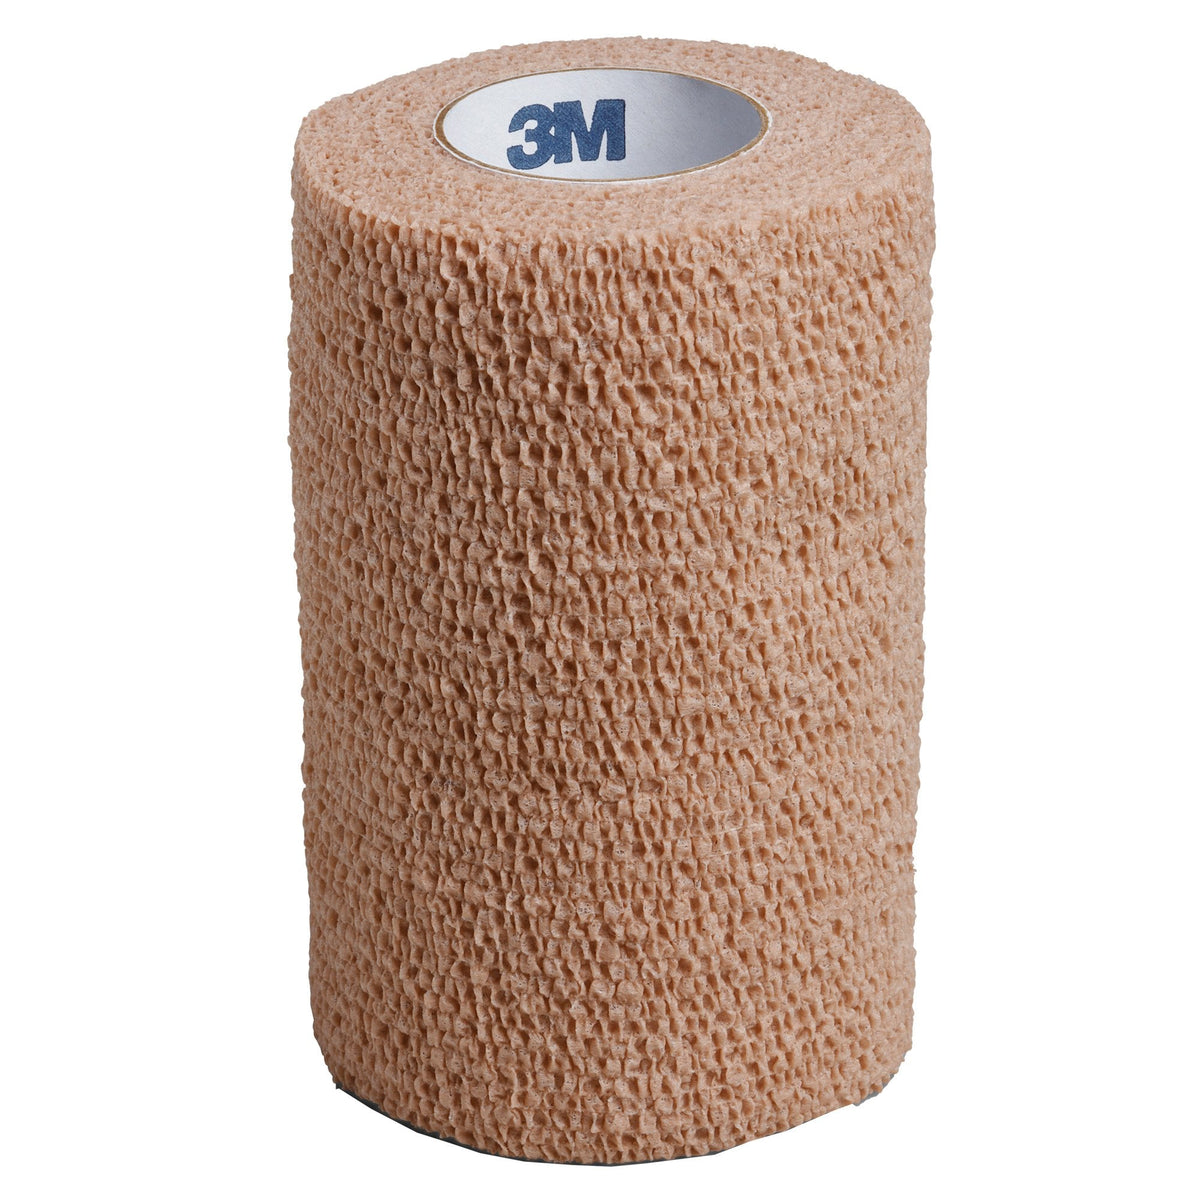 3M™ Elastic Adhesive Bandage, 8 cm x 4/6 m (stretched length)